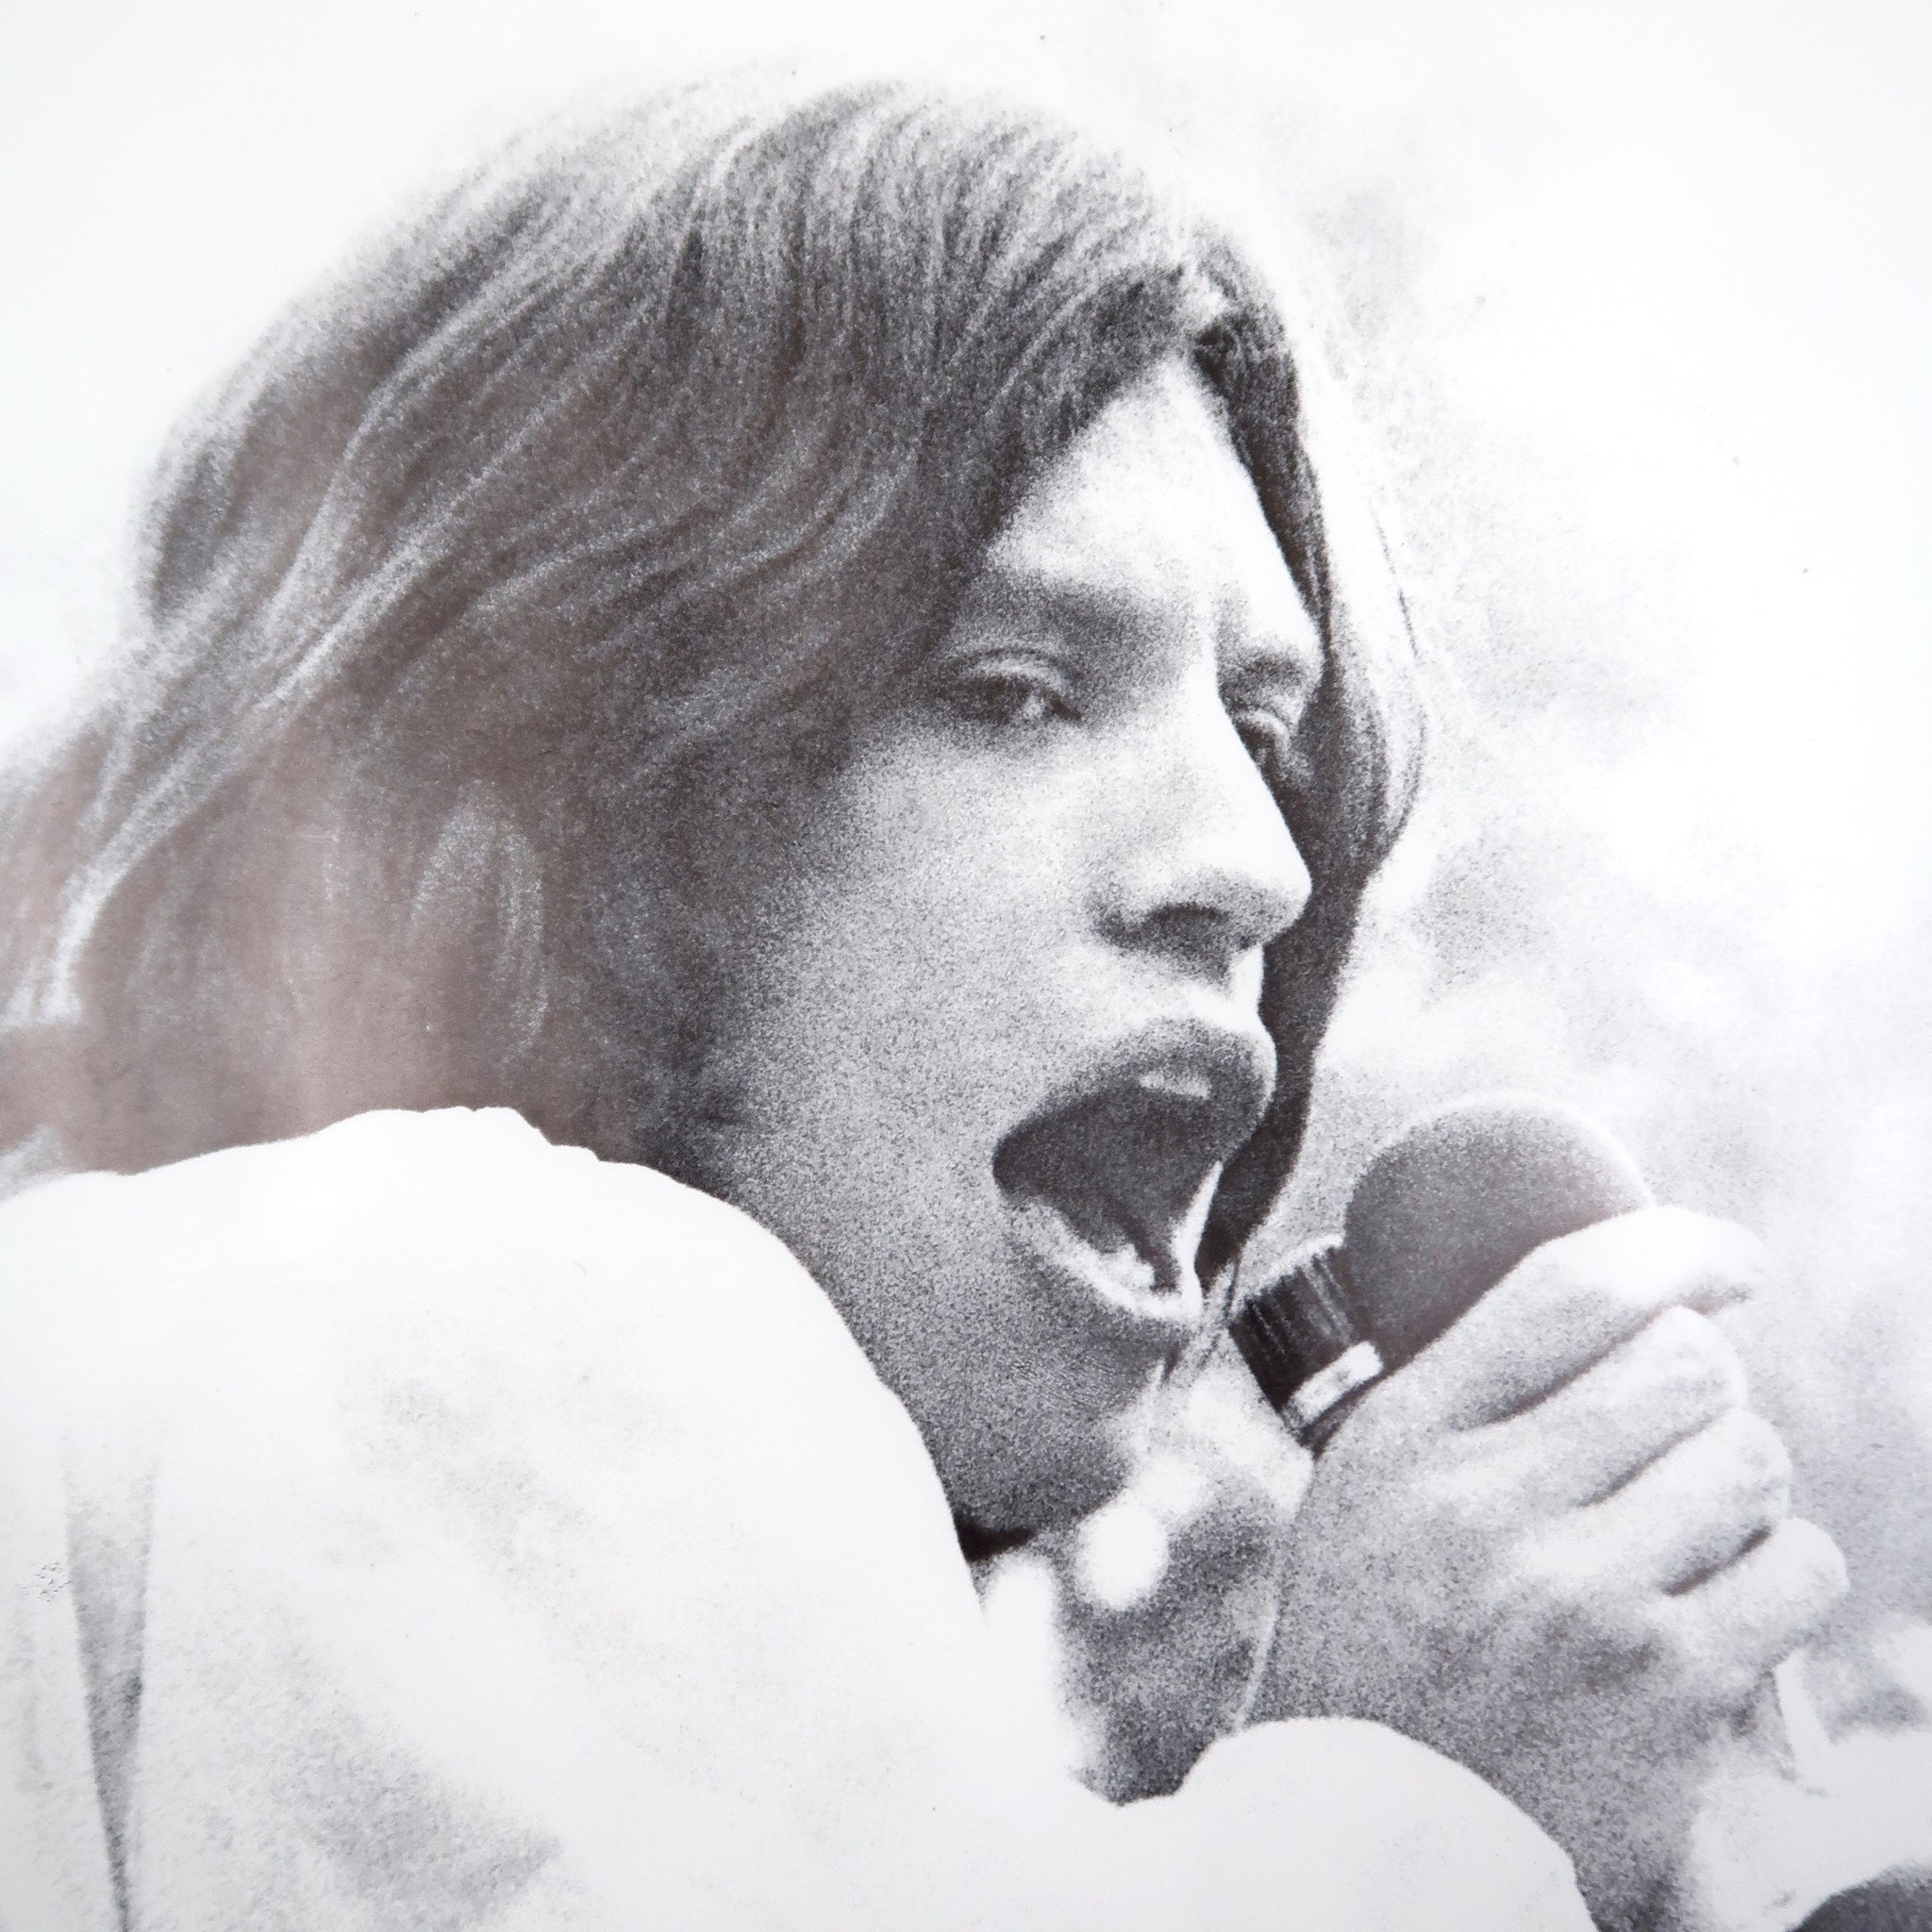 Original 1970's poster of Mick Jagger .